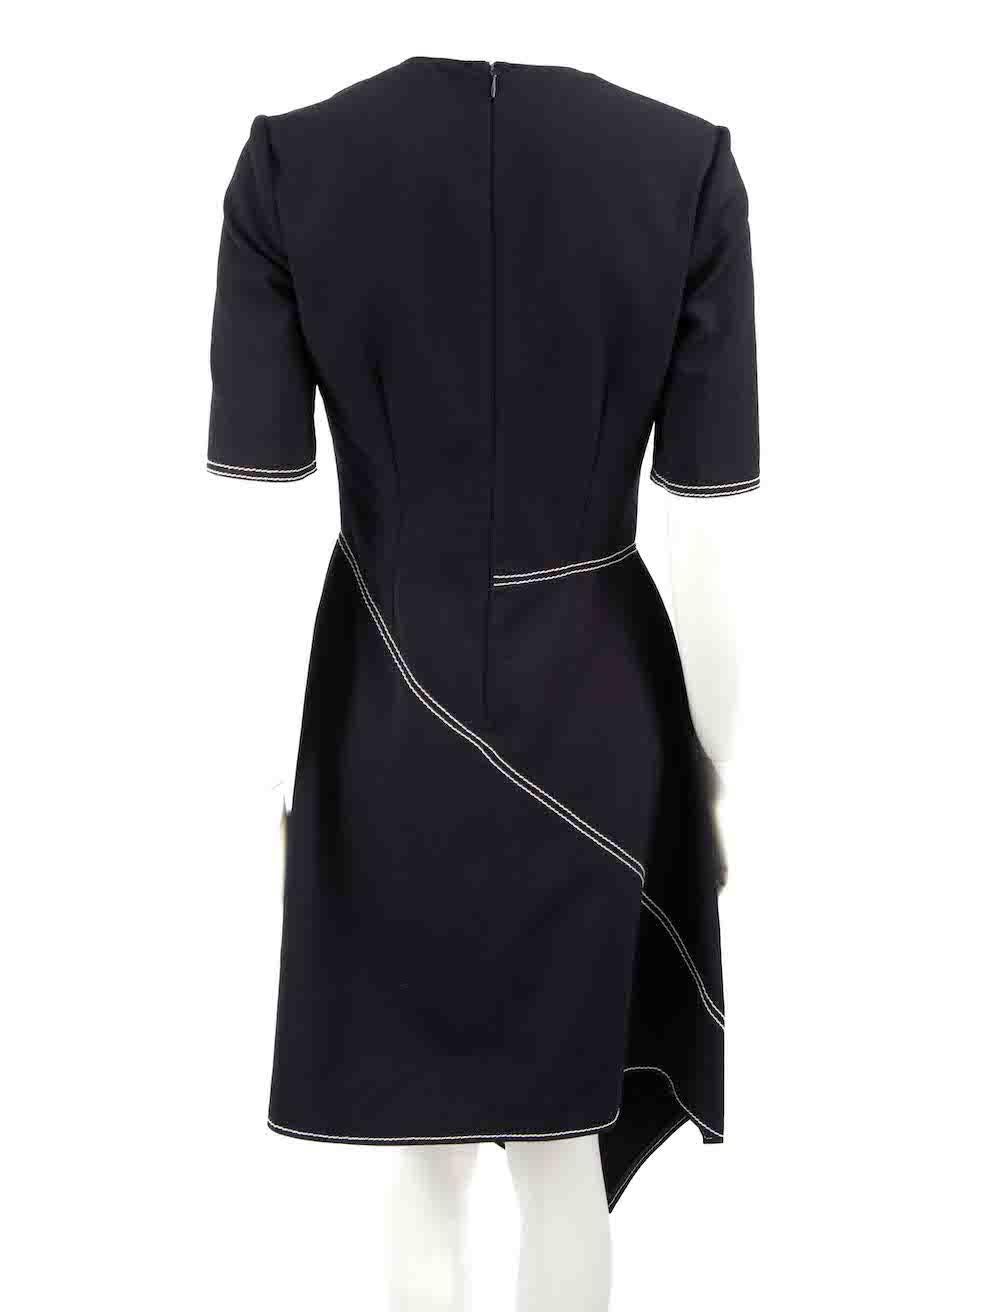 Stella McCartney Navy Wool Asymmetric Hem Dress Size S In Good Condition For Sale In London, GB